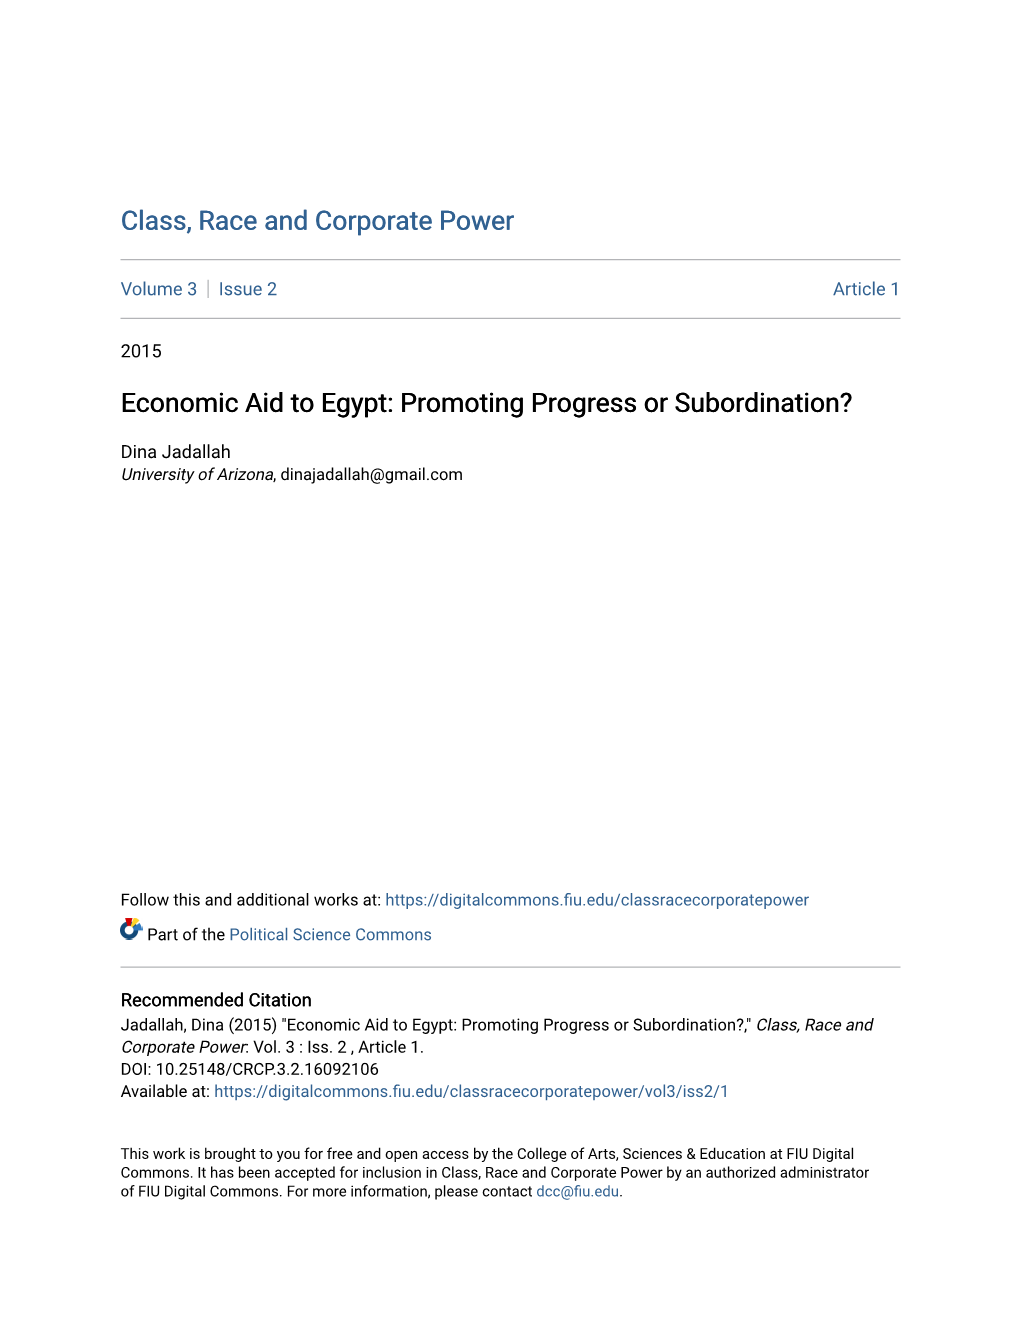 Economic Aid to Egypt: Promoting Progress Or Subordination?